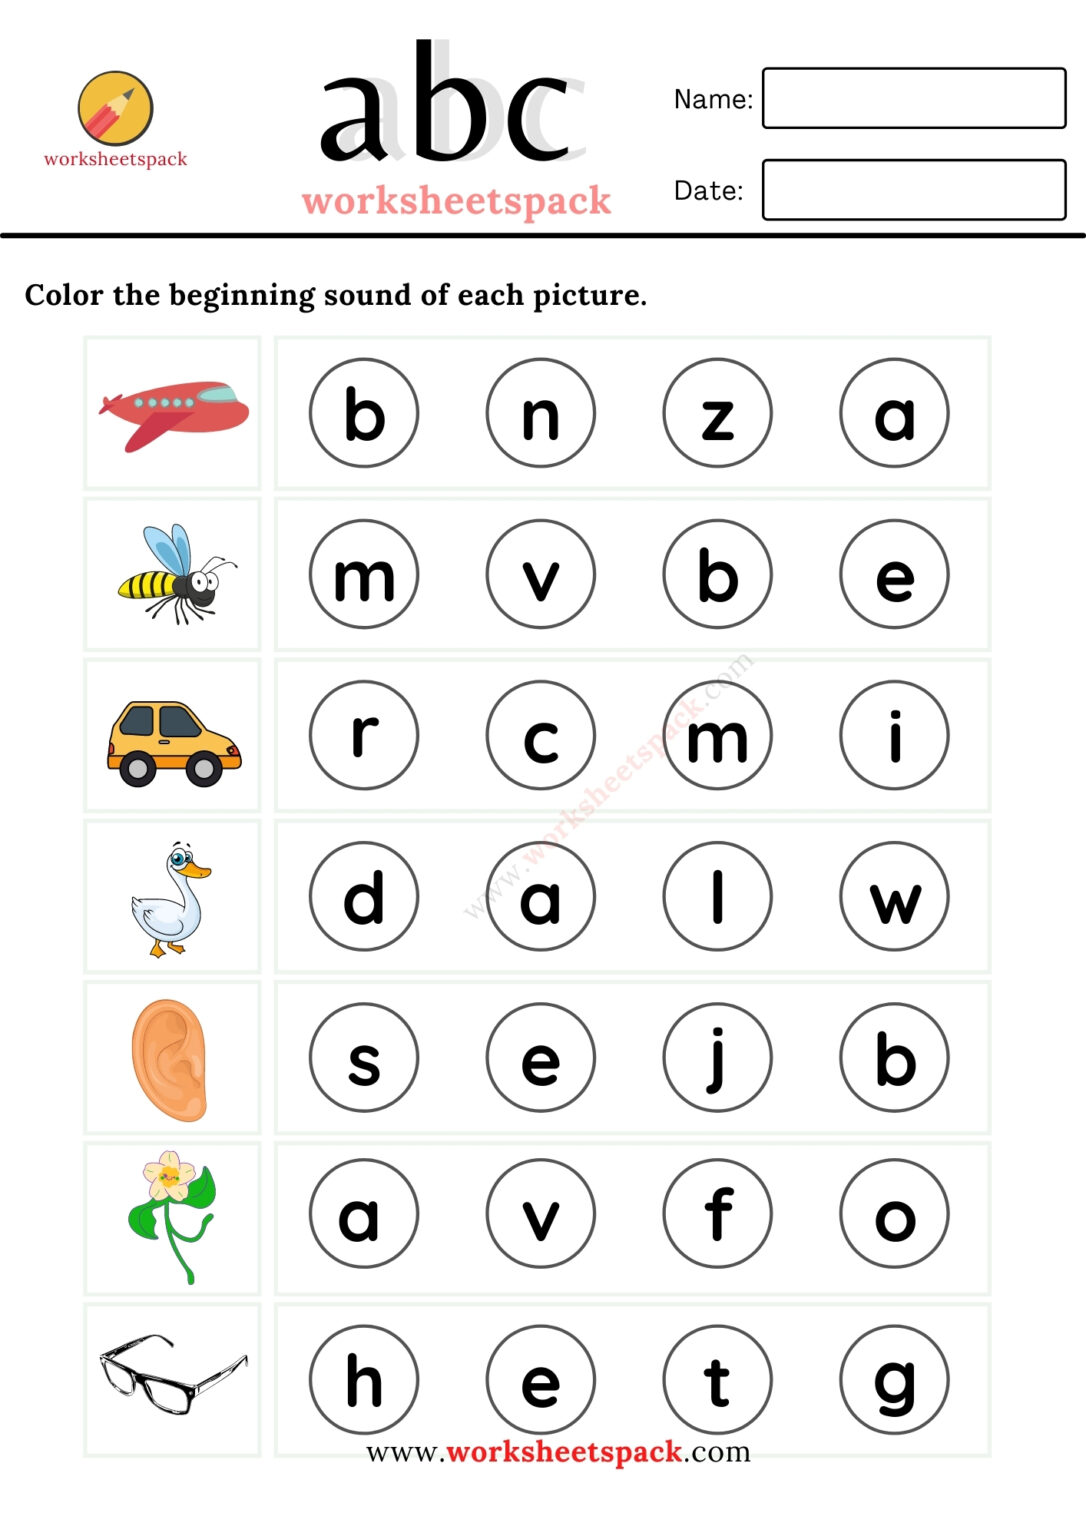 Free Insect Beginning Sound Worksheet Printable for Kids - worksheetspack